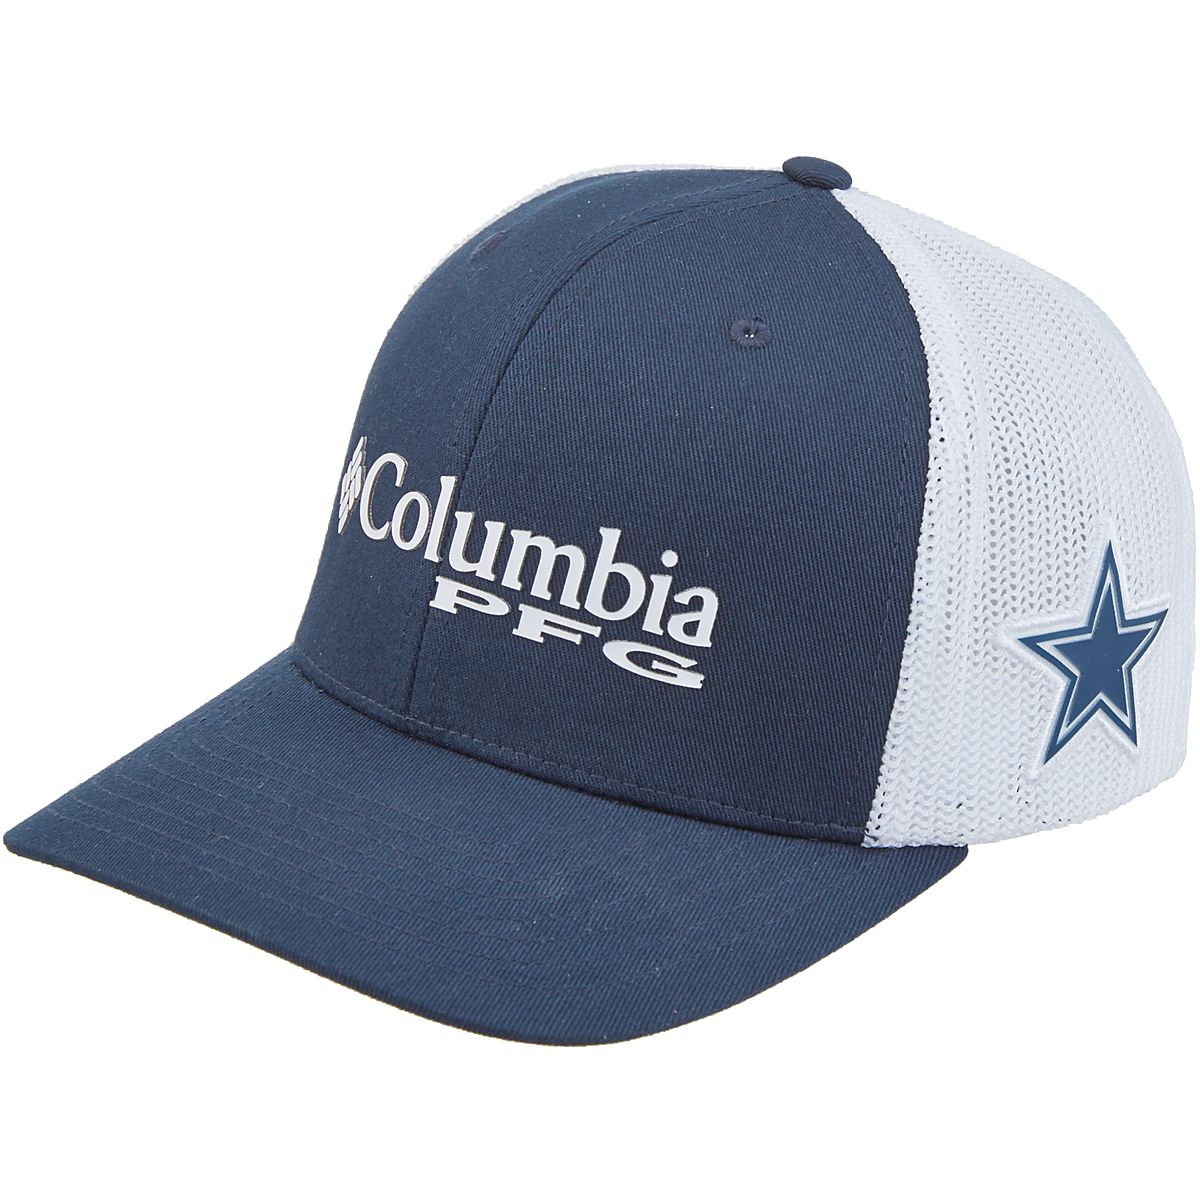 Casquette Columbia Navy Dallas Cowboys PFG Mesh Snapback pour homme